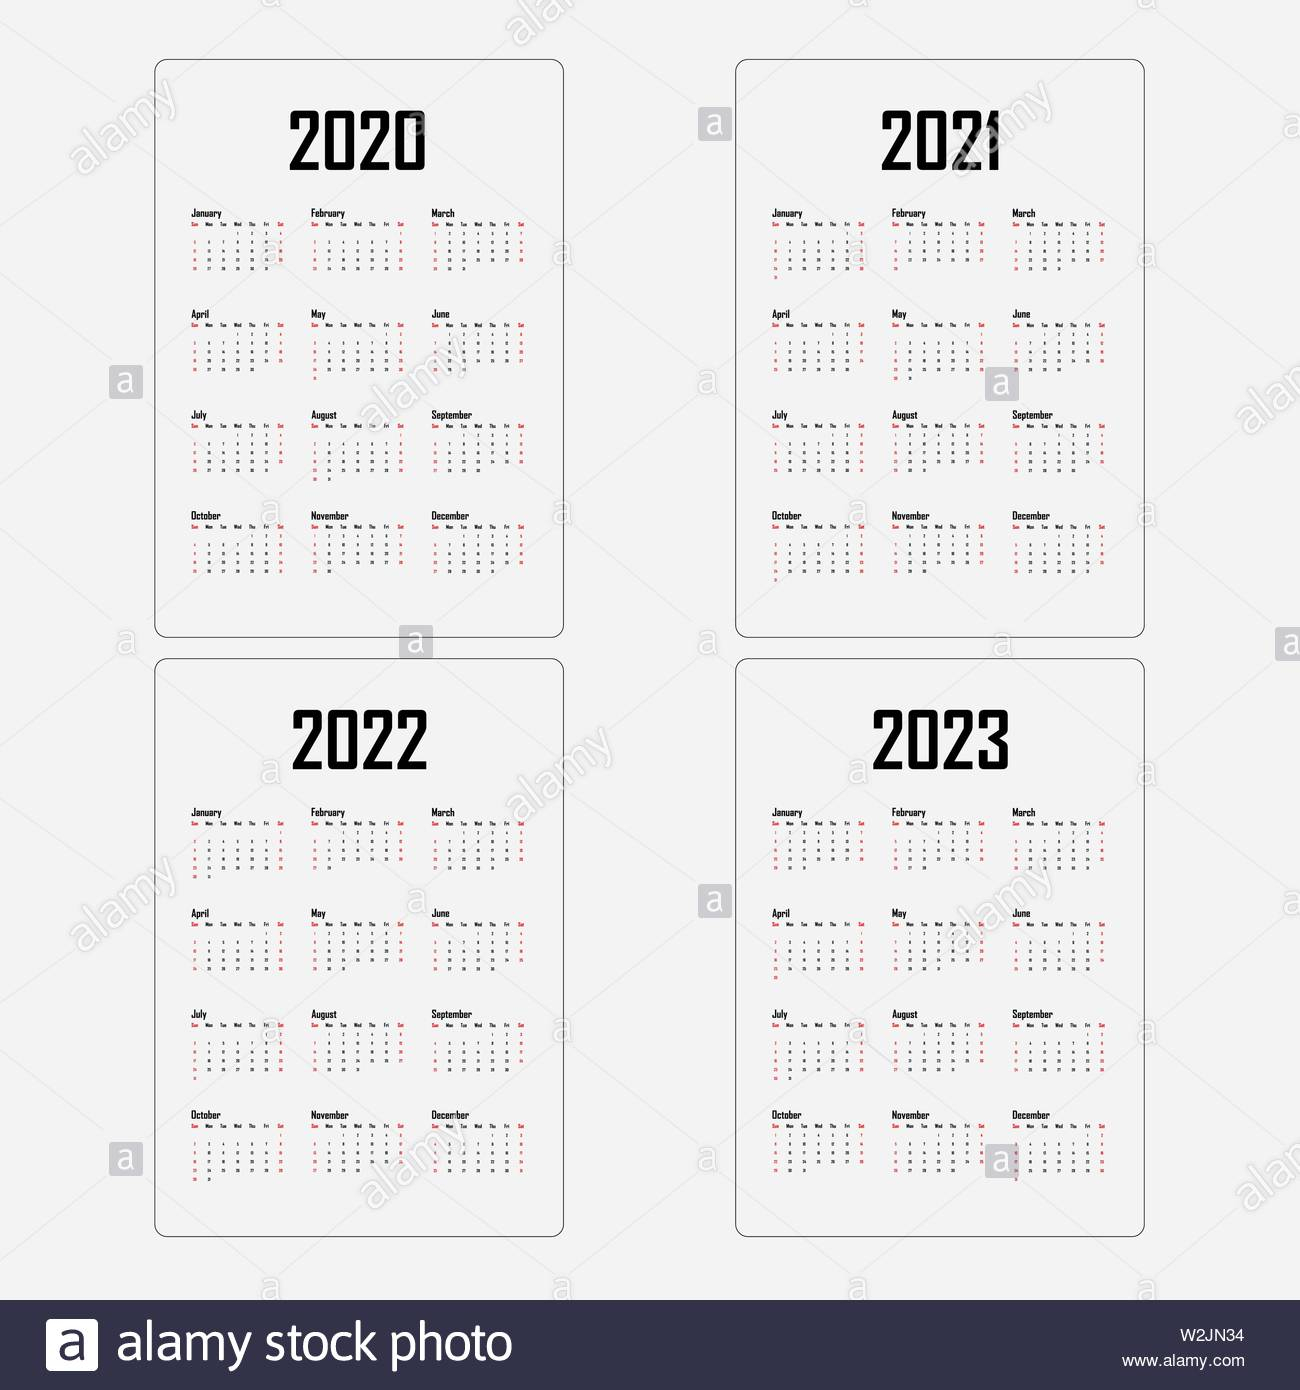 Calendar 2020, 2021,2022 And 2023 Calendar Template.yearly